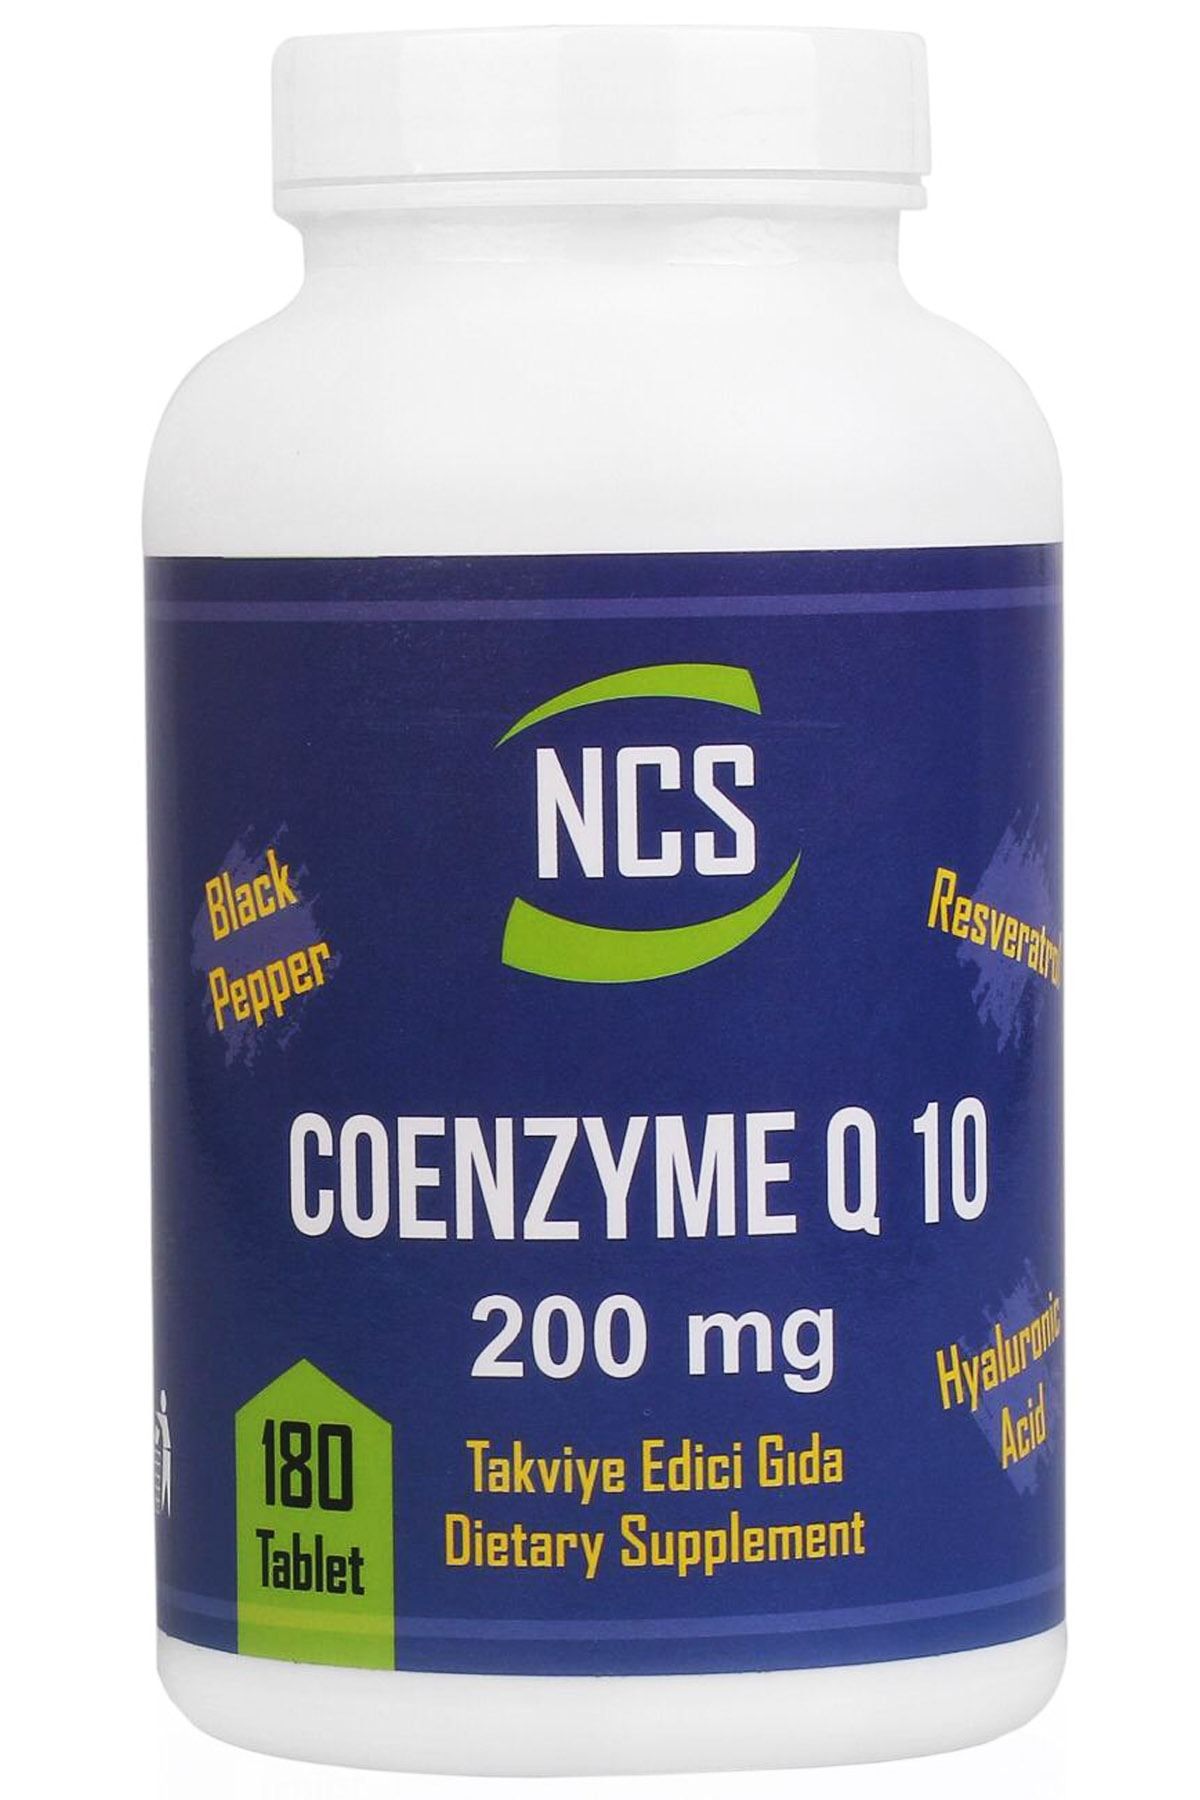 Ncs Coenzyme Q-10 200 mg 180 Tablet